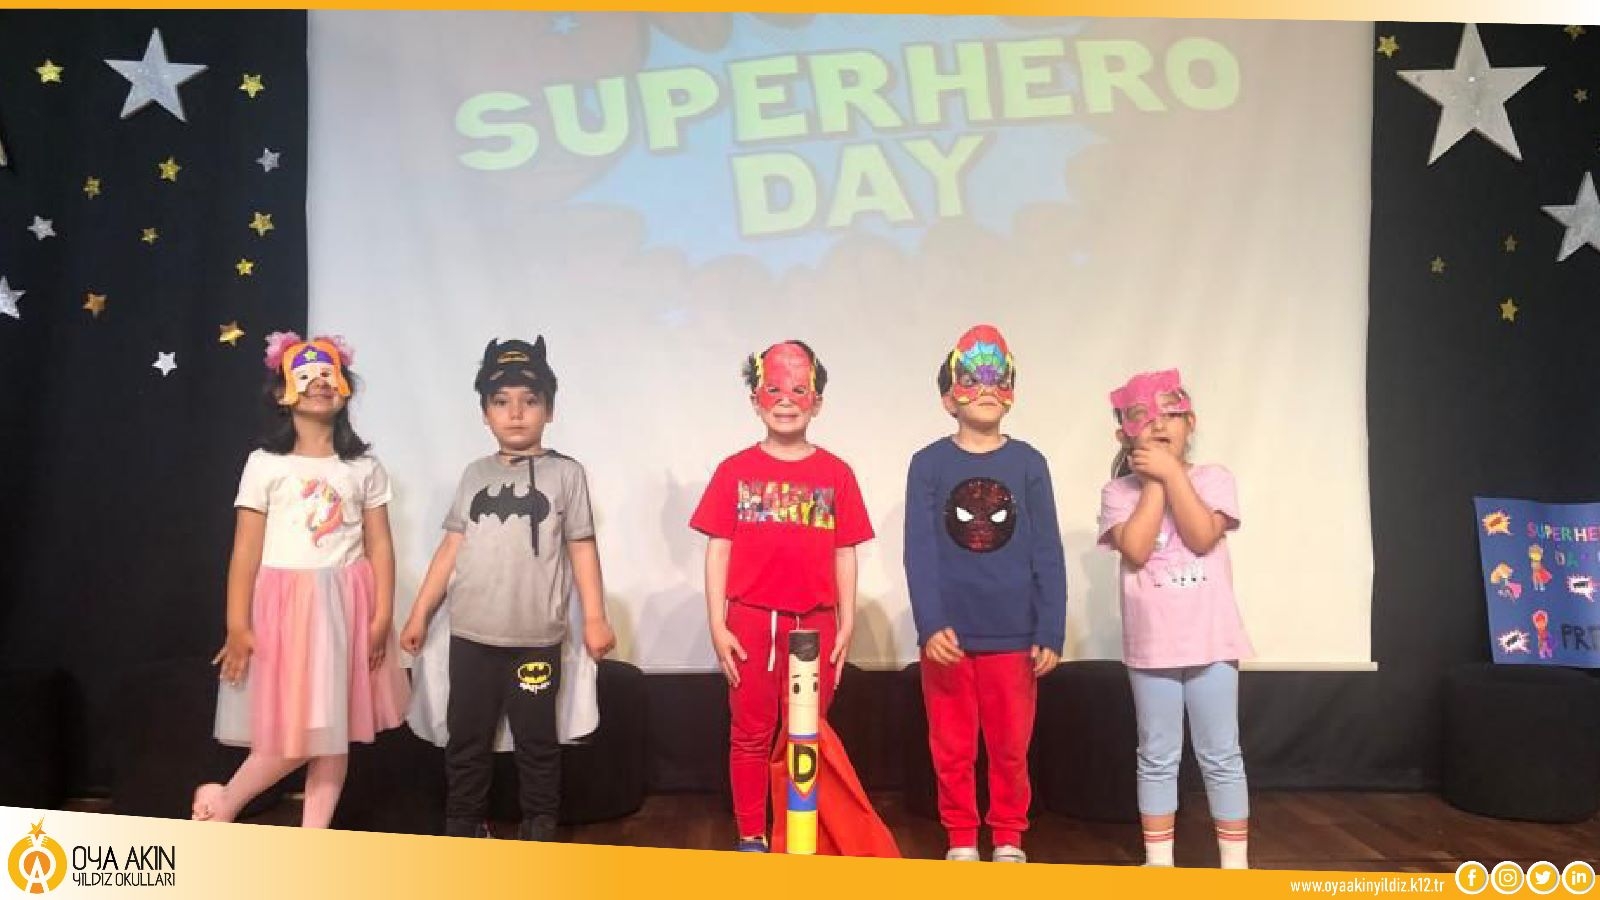 International Superhero Day